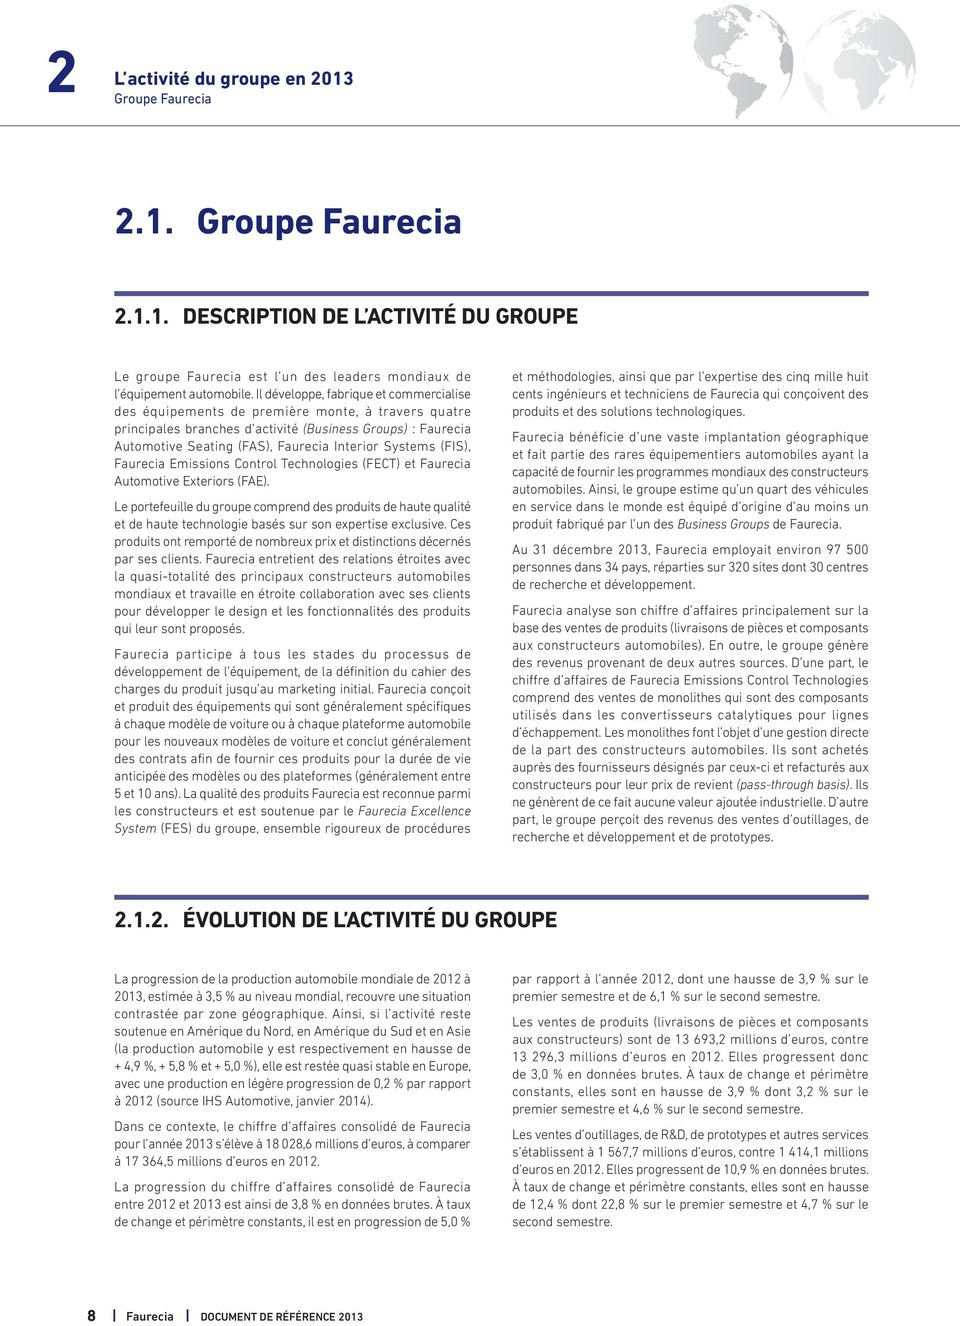 Systems (FIS), Faurecia Emissions Control Technologies (FECT) et Faurecia Automotive Exteriors (FAE).